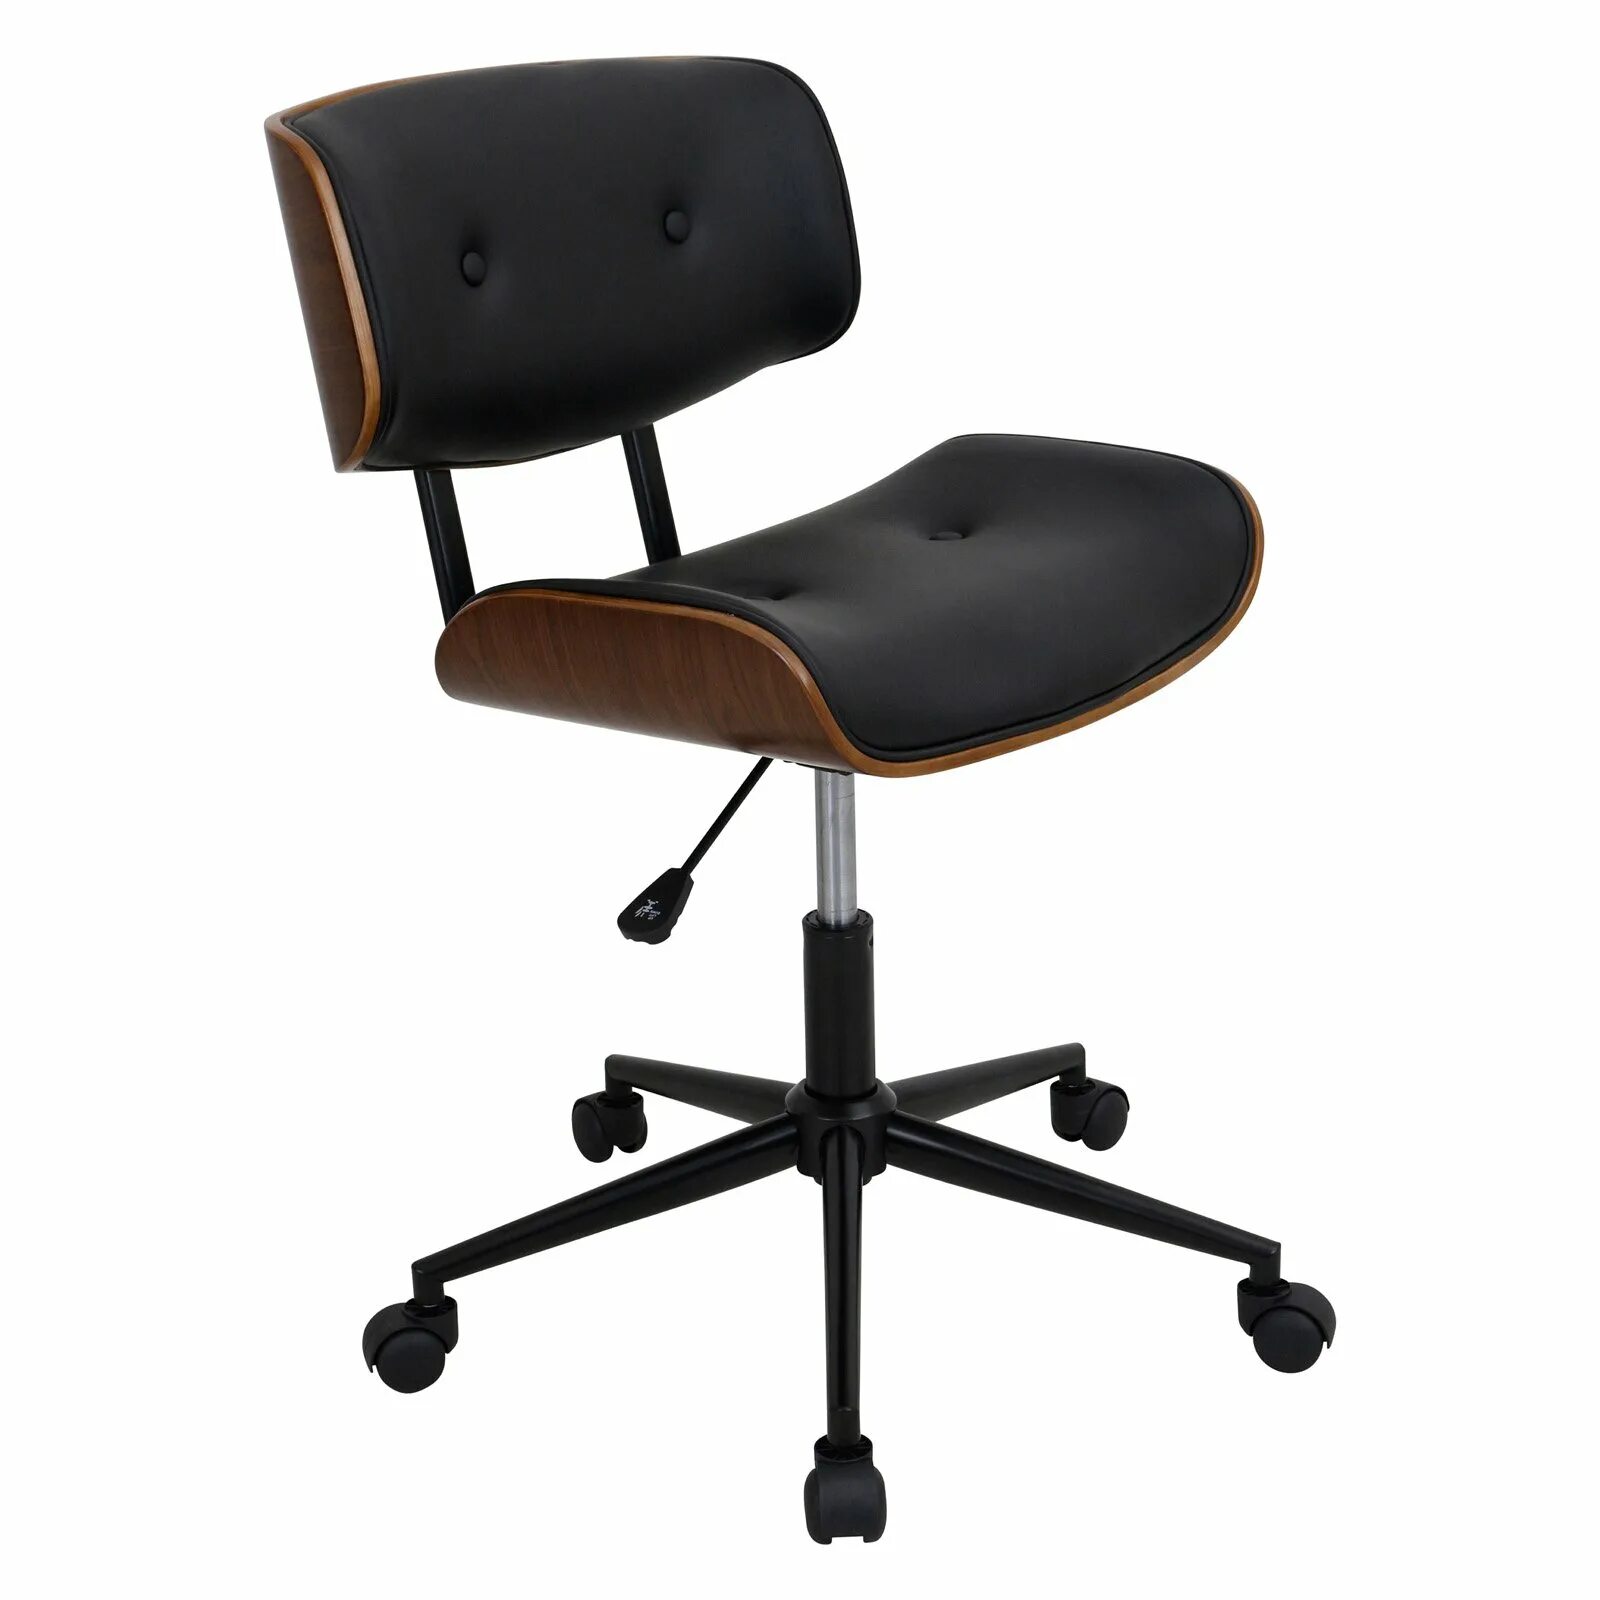 Стул офисный chair. Кресло Savoy Leather Chair. Bentwood Swivel Office Chair. Офисный стул Mid Century. Стул Finley Swivel Office Chair.